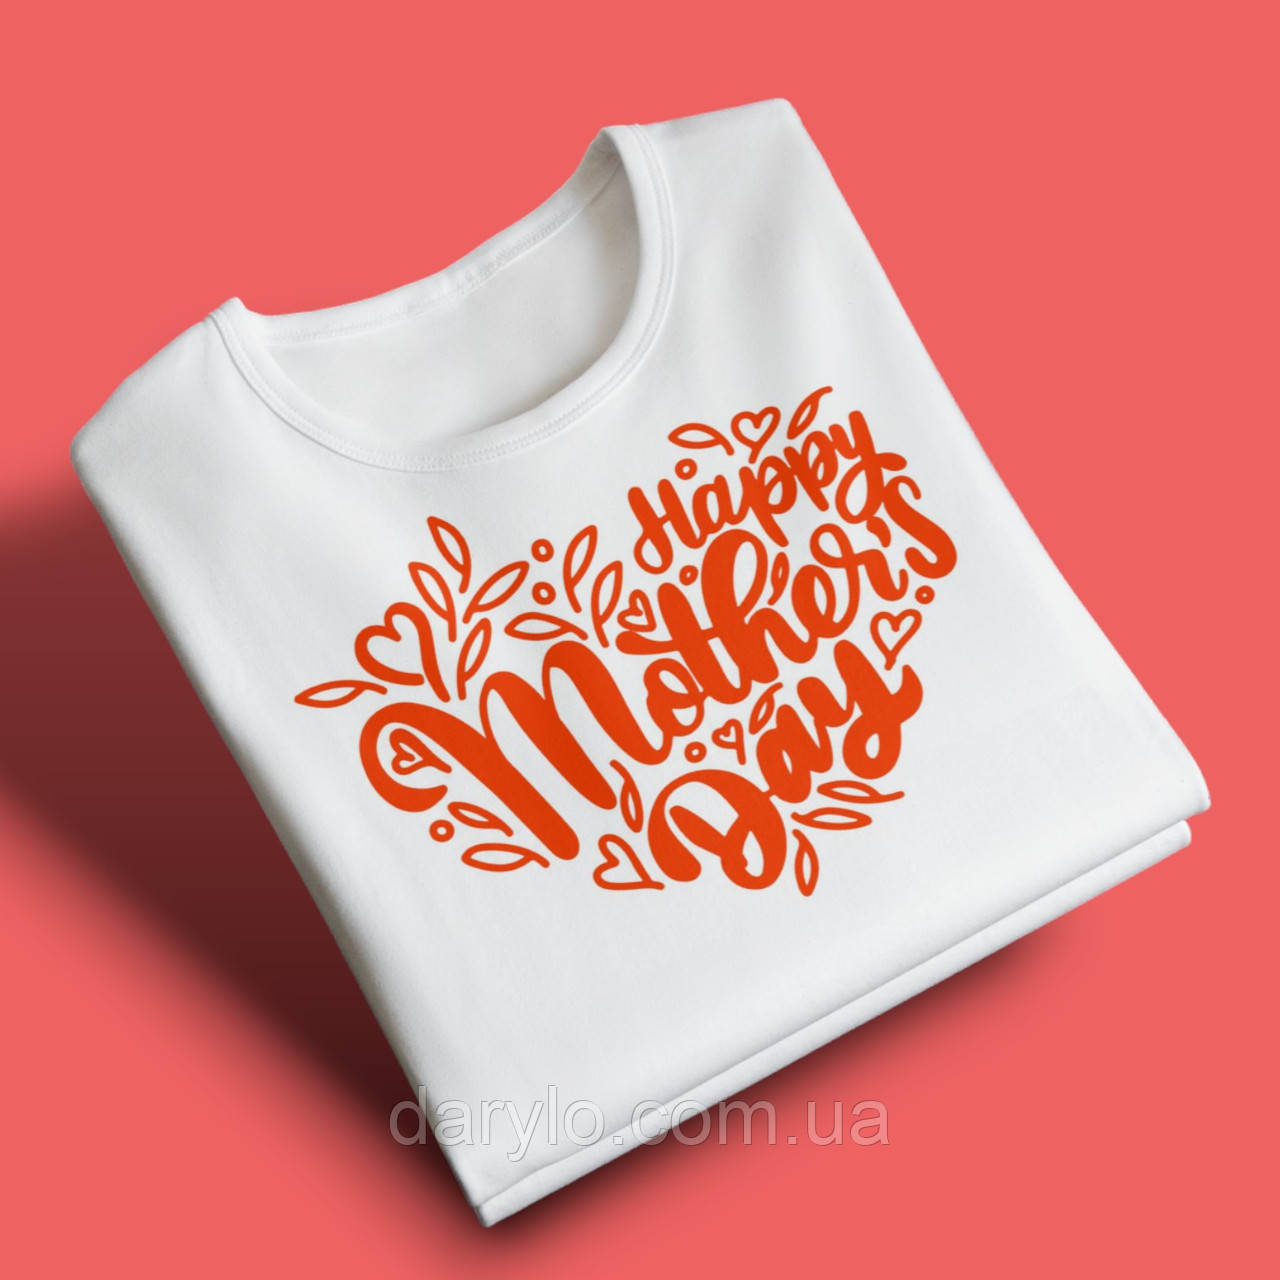 "Happy mother day" футболка для мами, біла